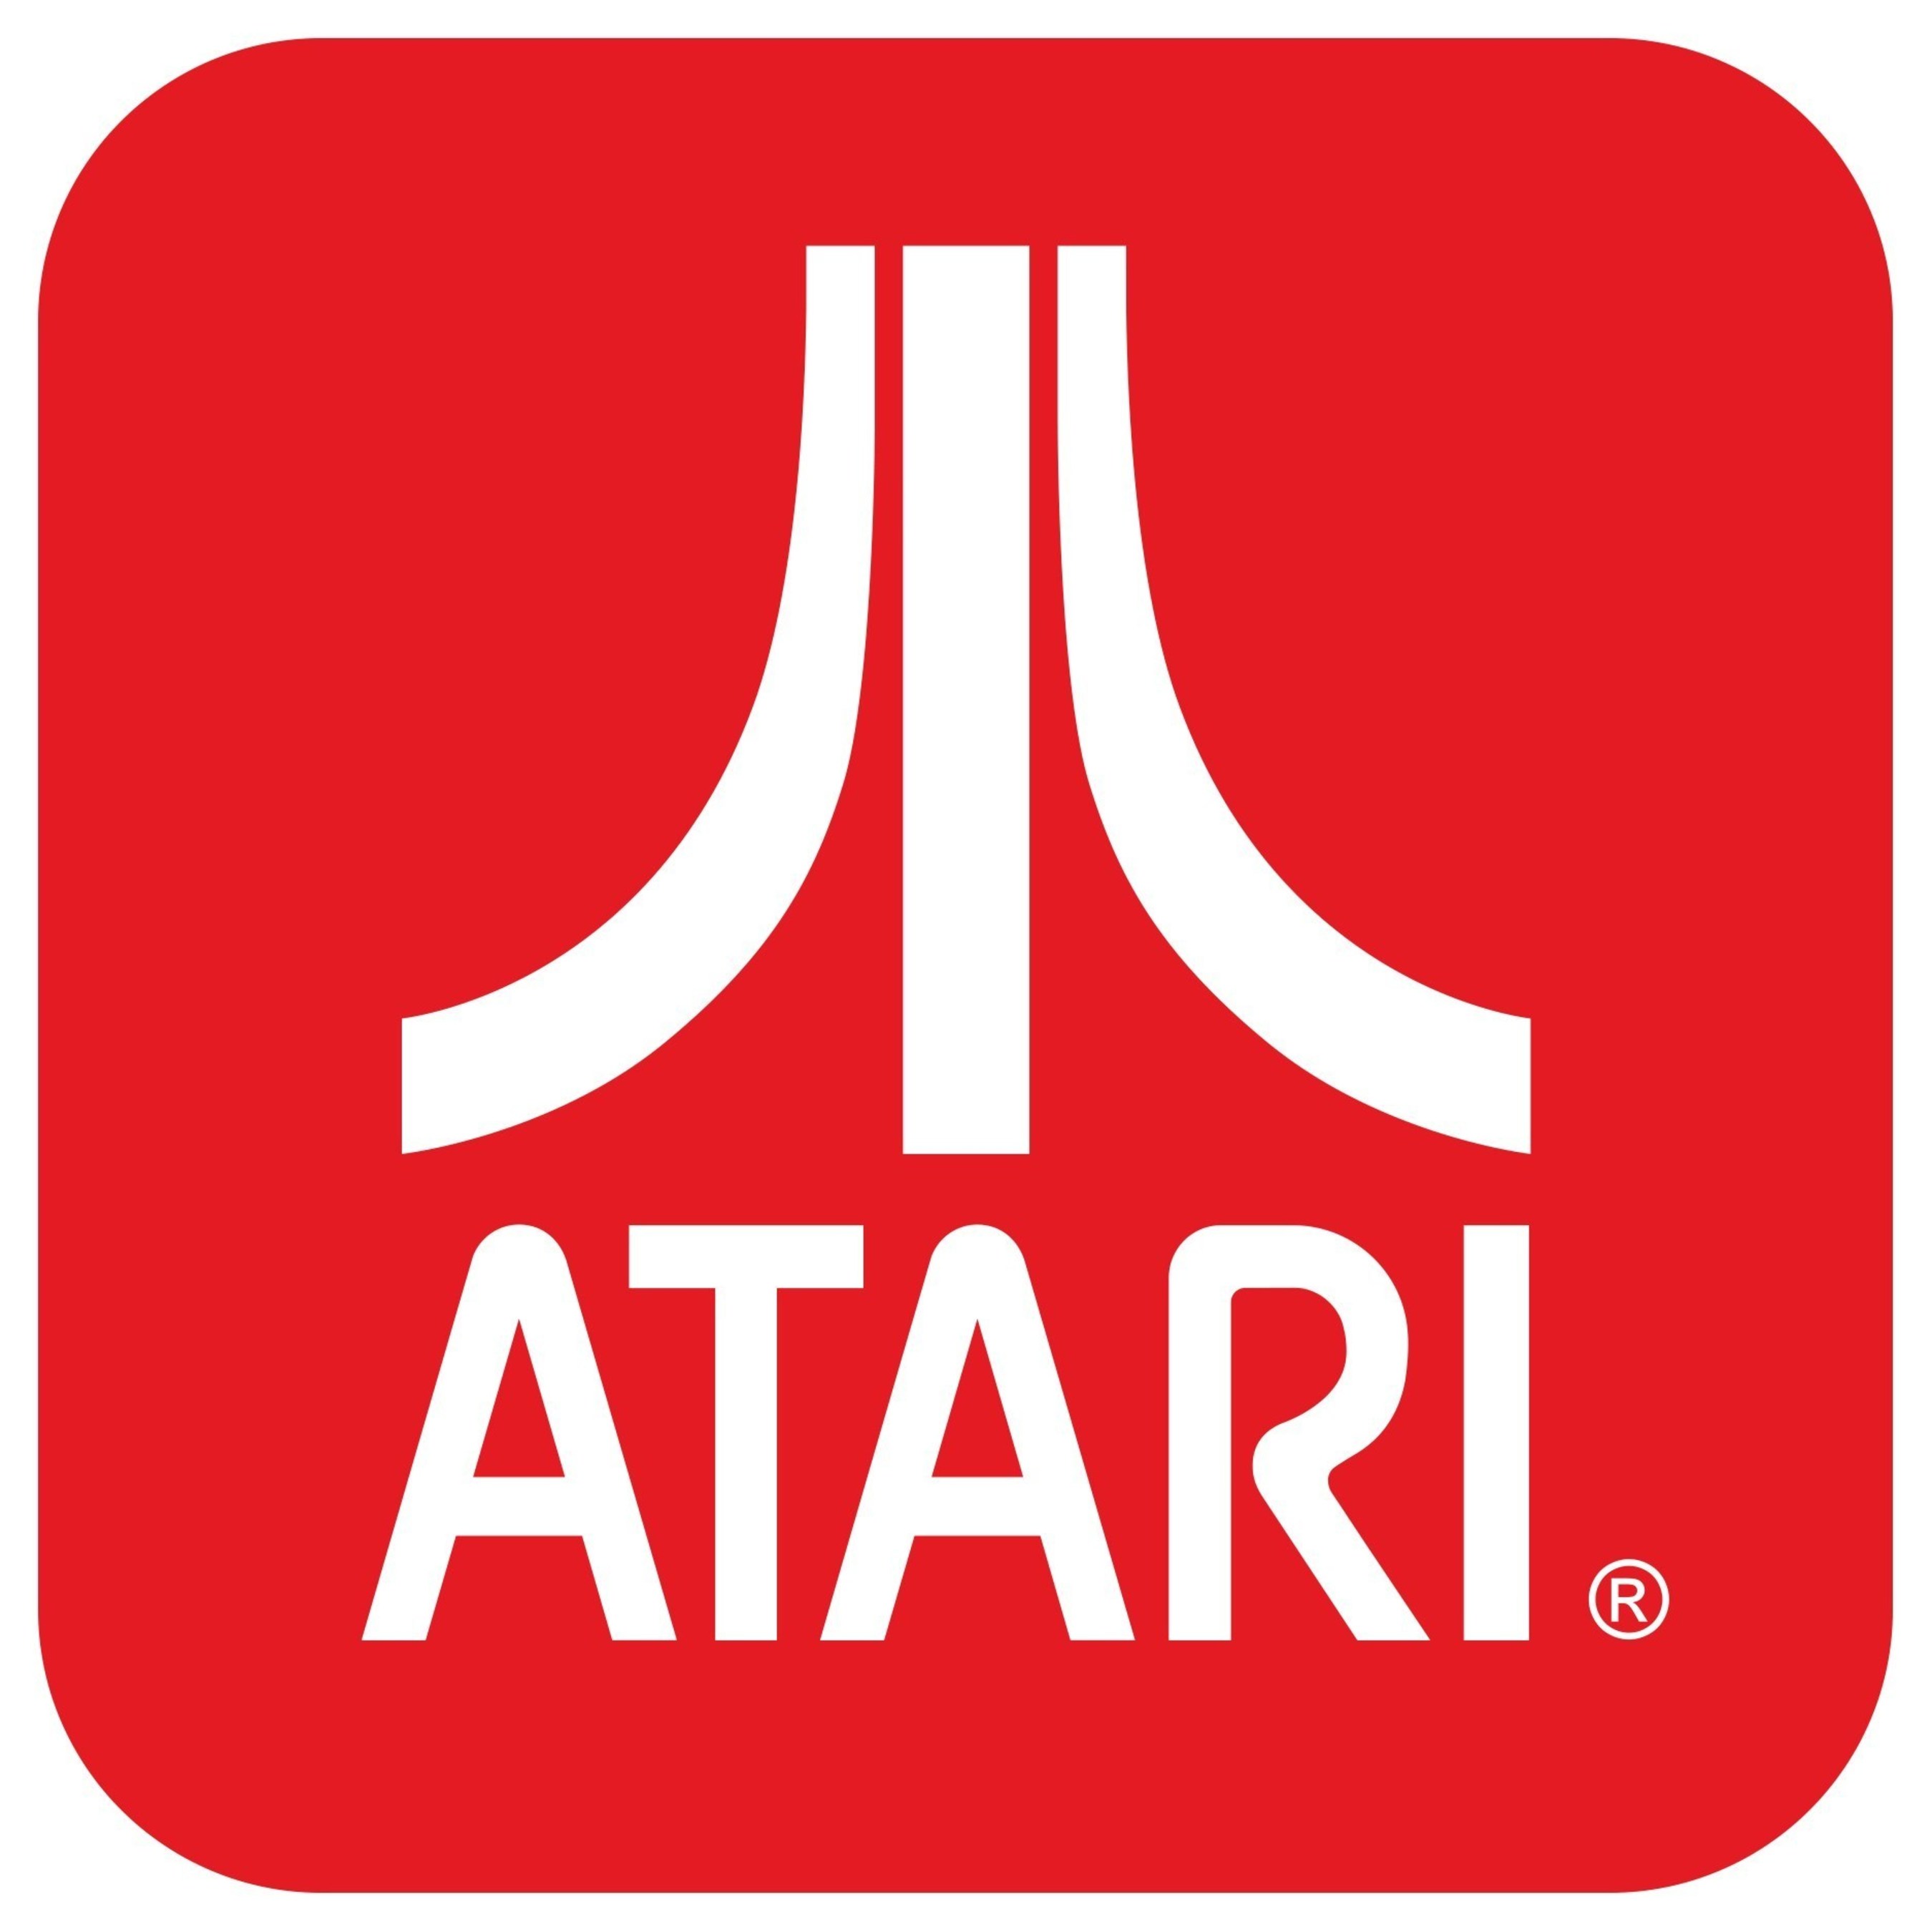 Atari (PRNewsFoto/Atari)